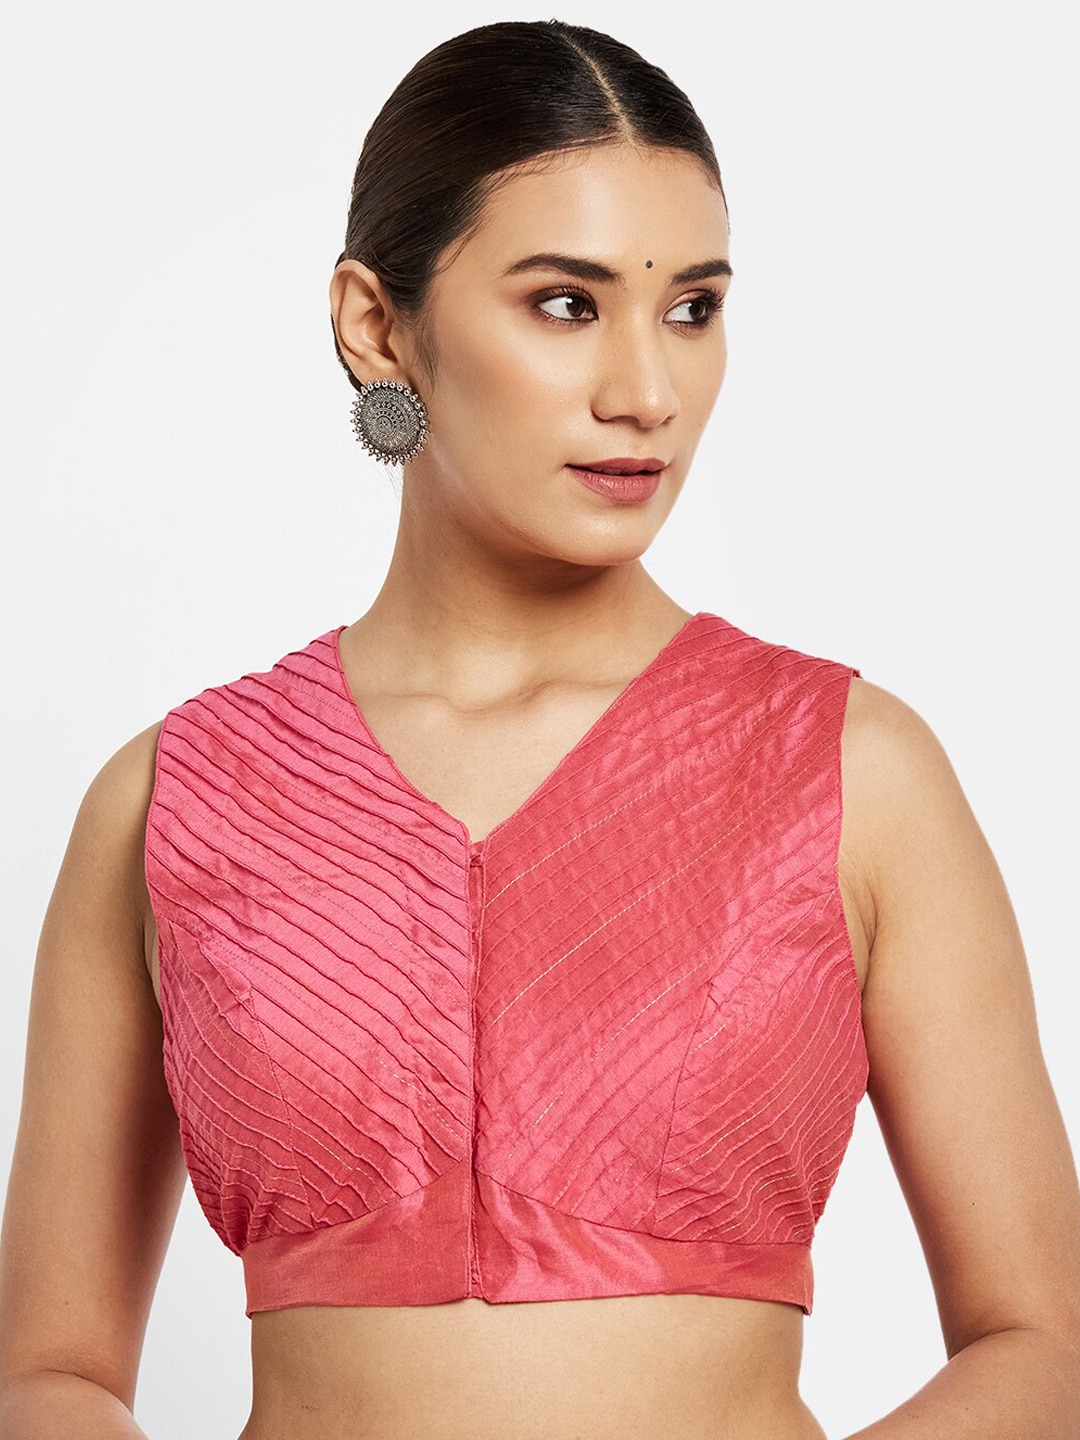 Fabindia Pink Solid Pintucks Saree Blouse Price in India